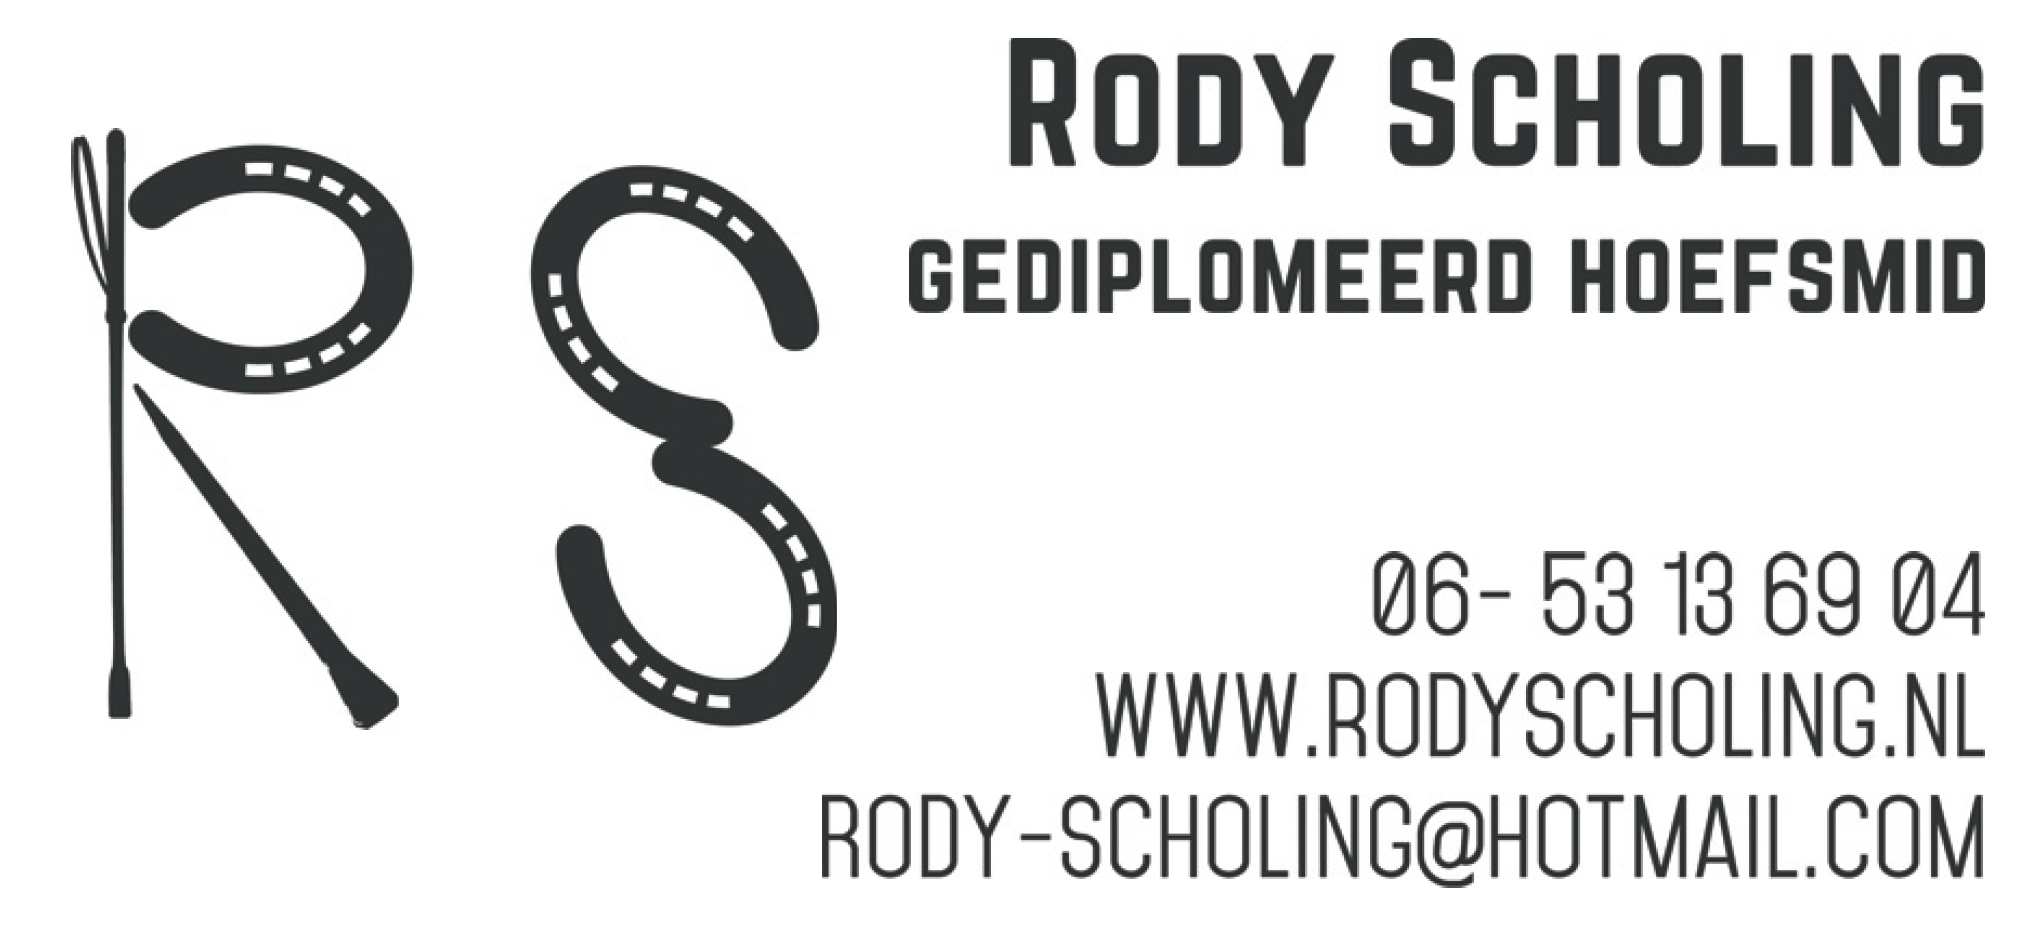 Rody Scholing - gediplomeerd hoefsmid